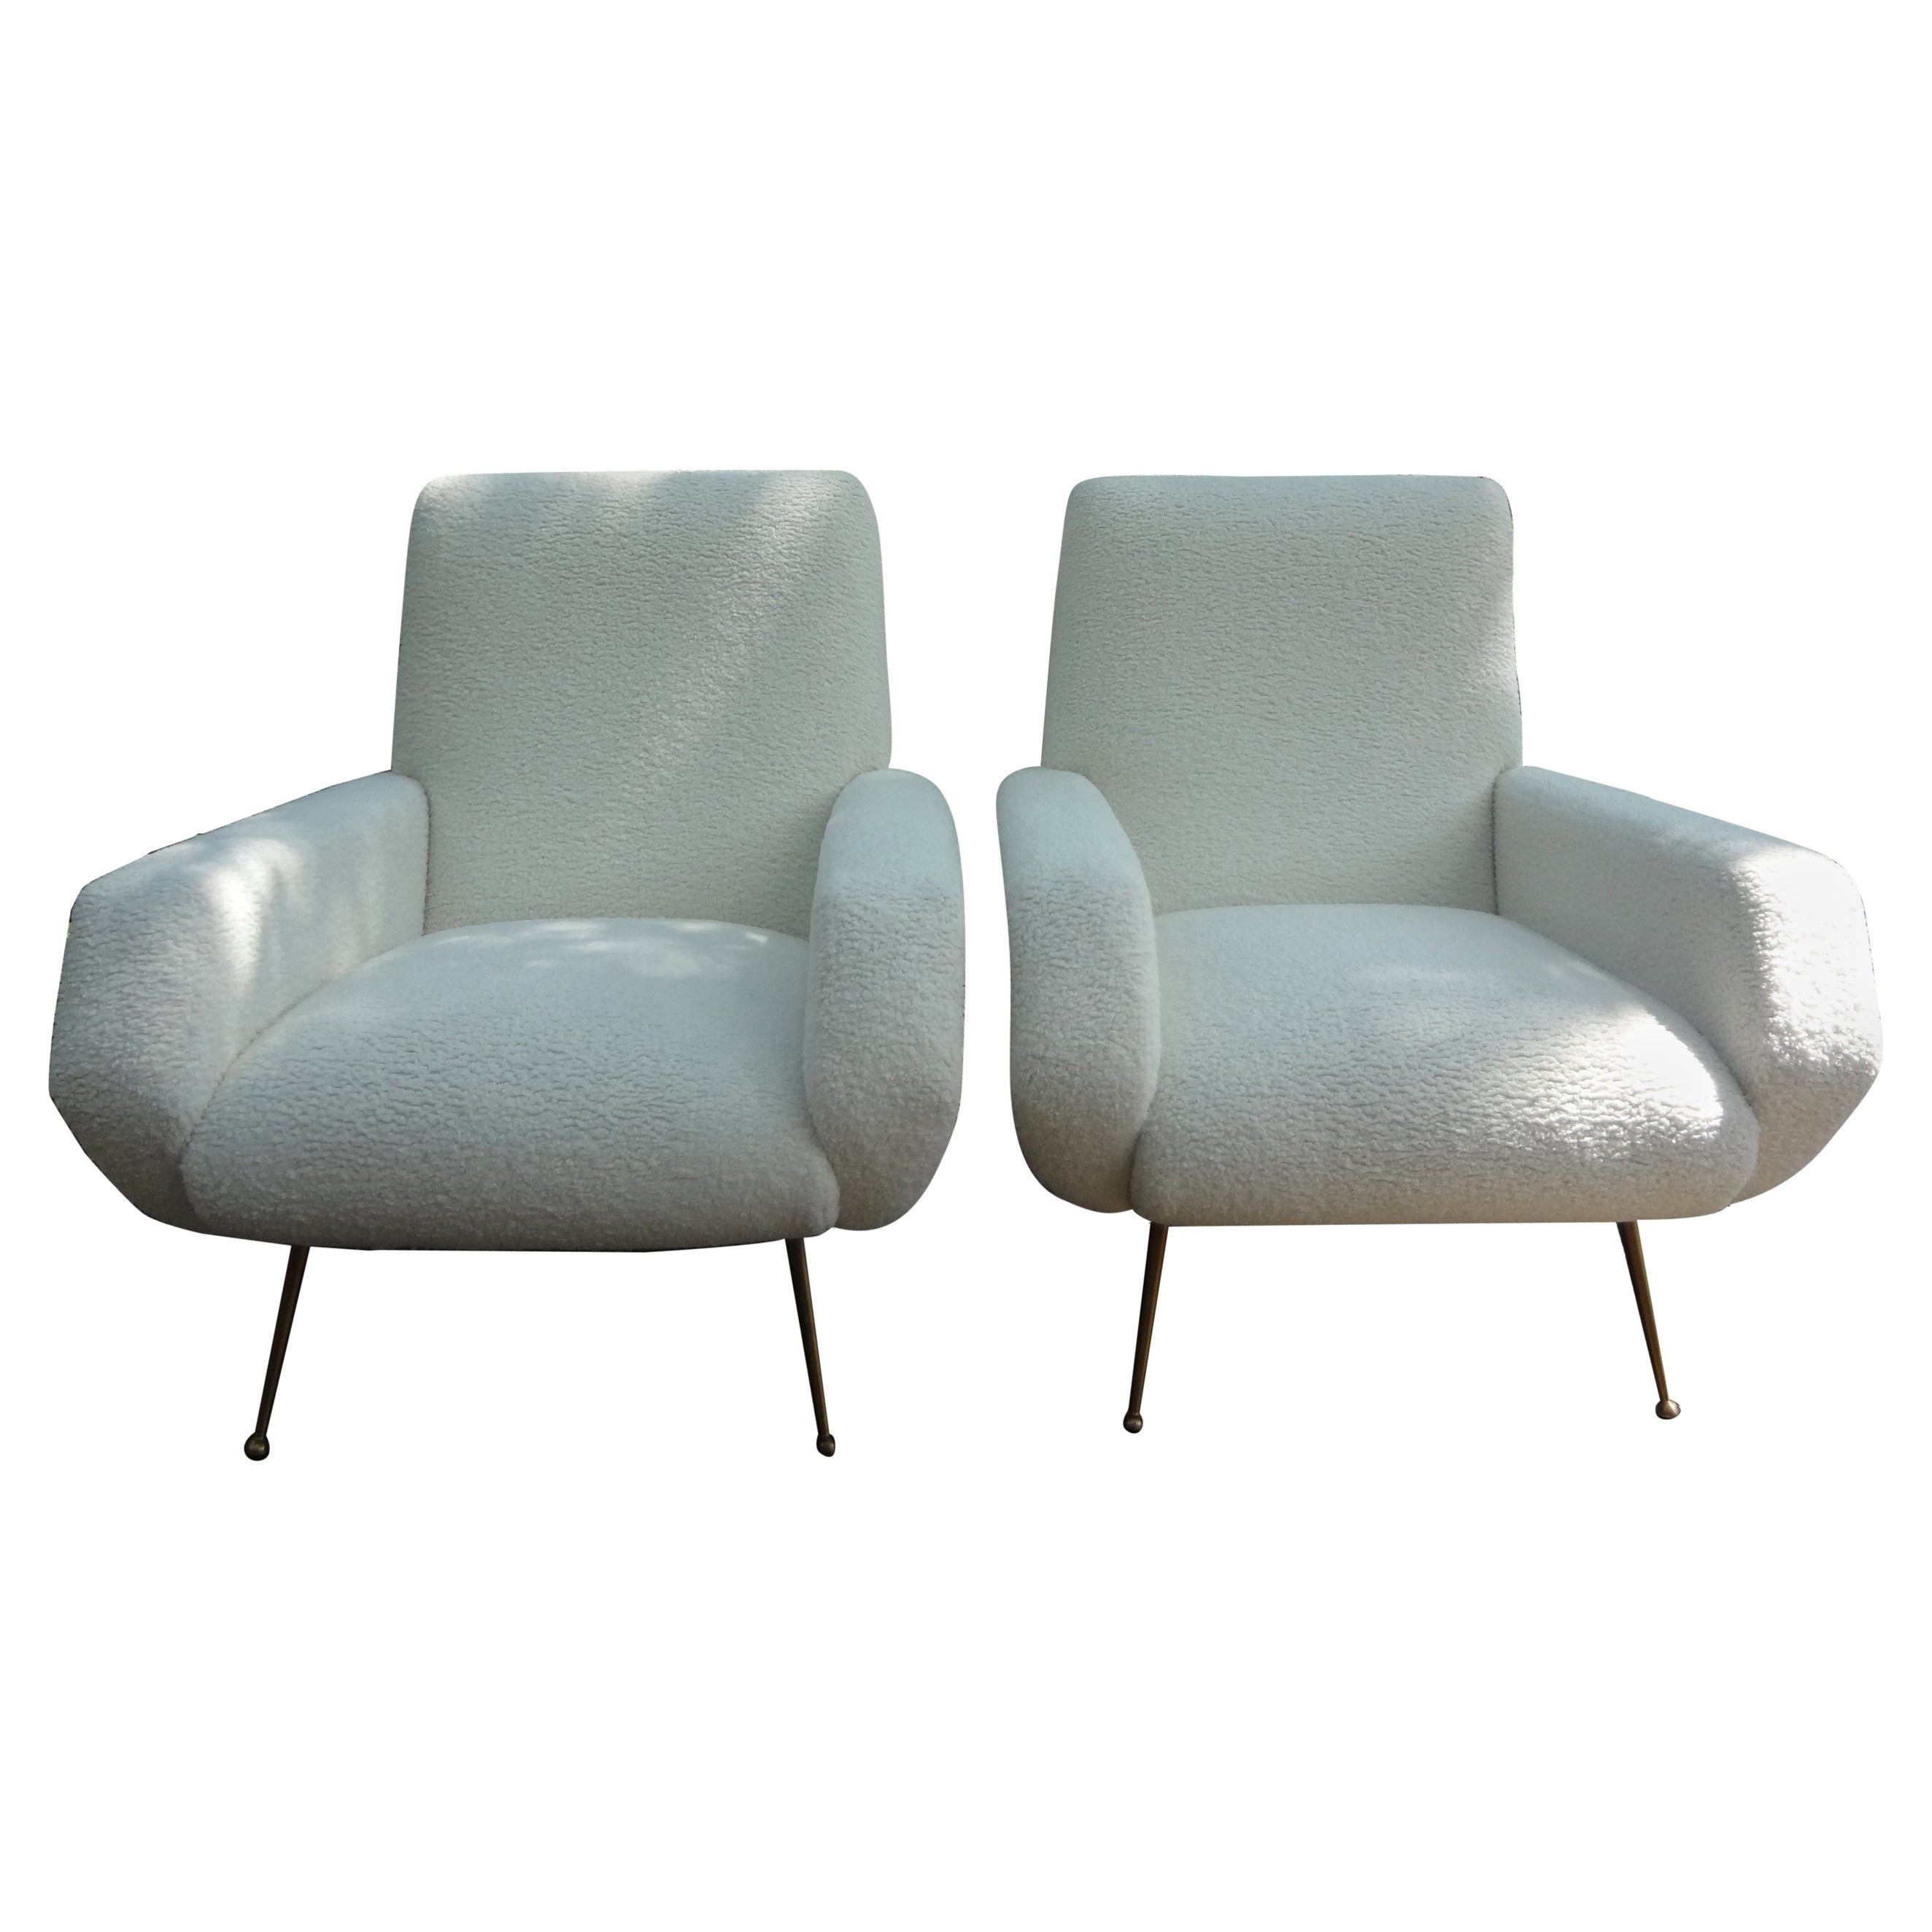 Pair of Italian Modern Gio Ponti Inspired Lounge Chairs